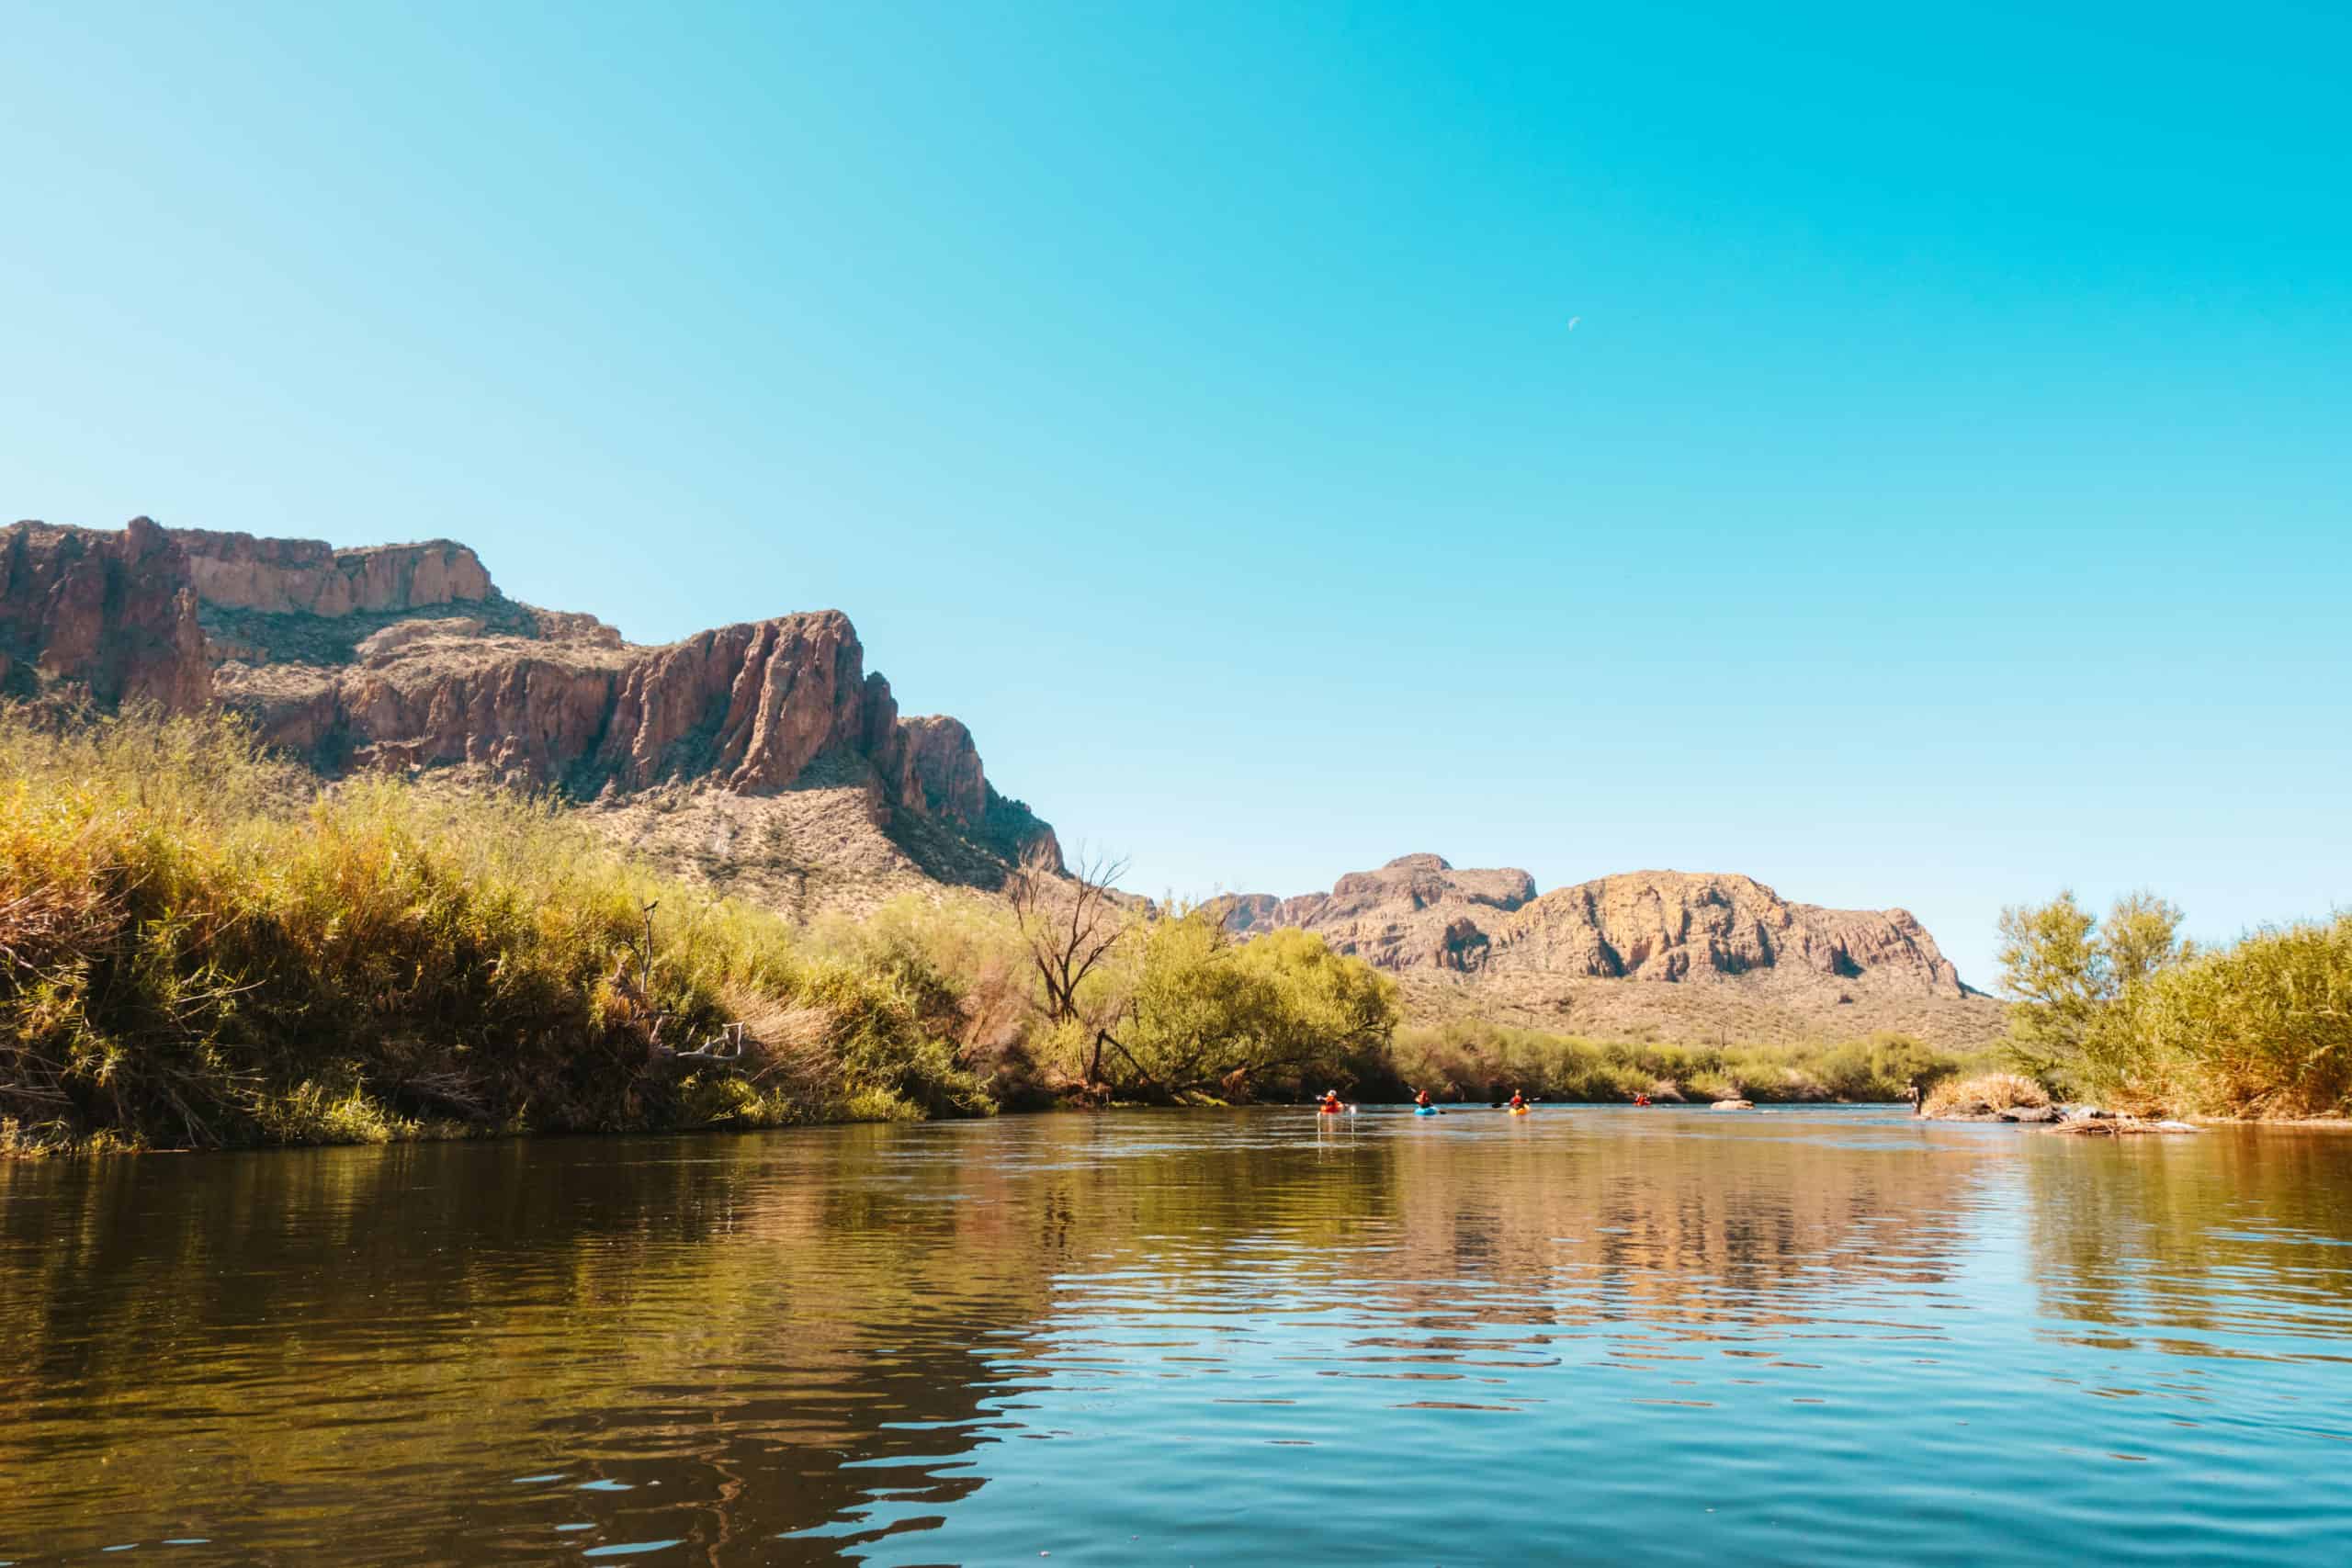 Mountain views from the Salt River in Phoenix, Arizona